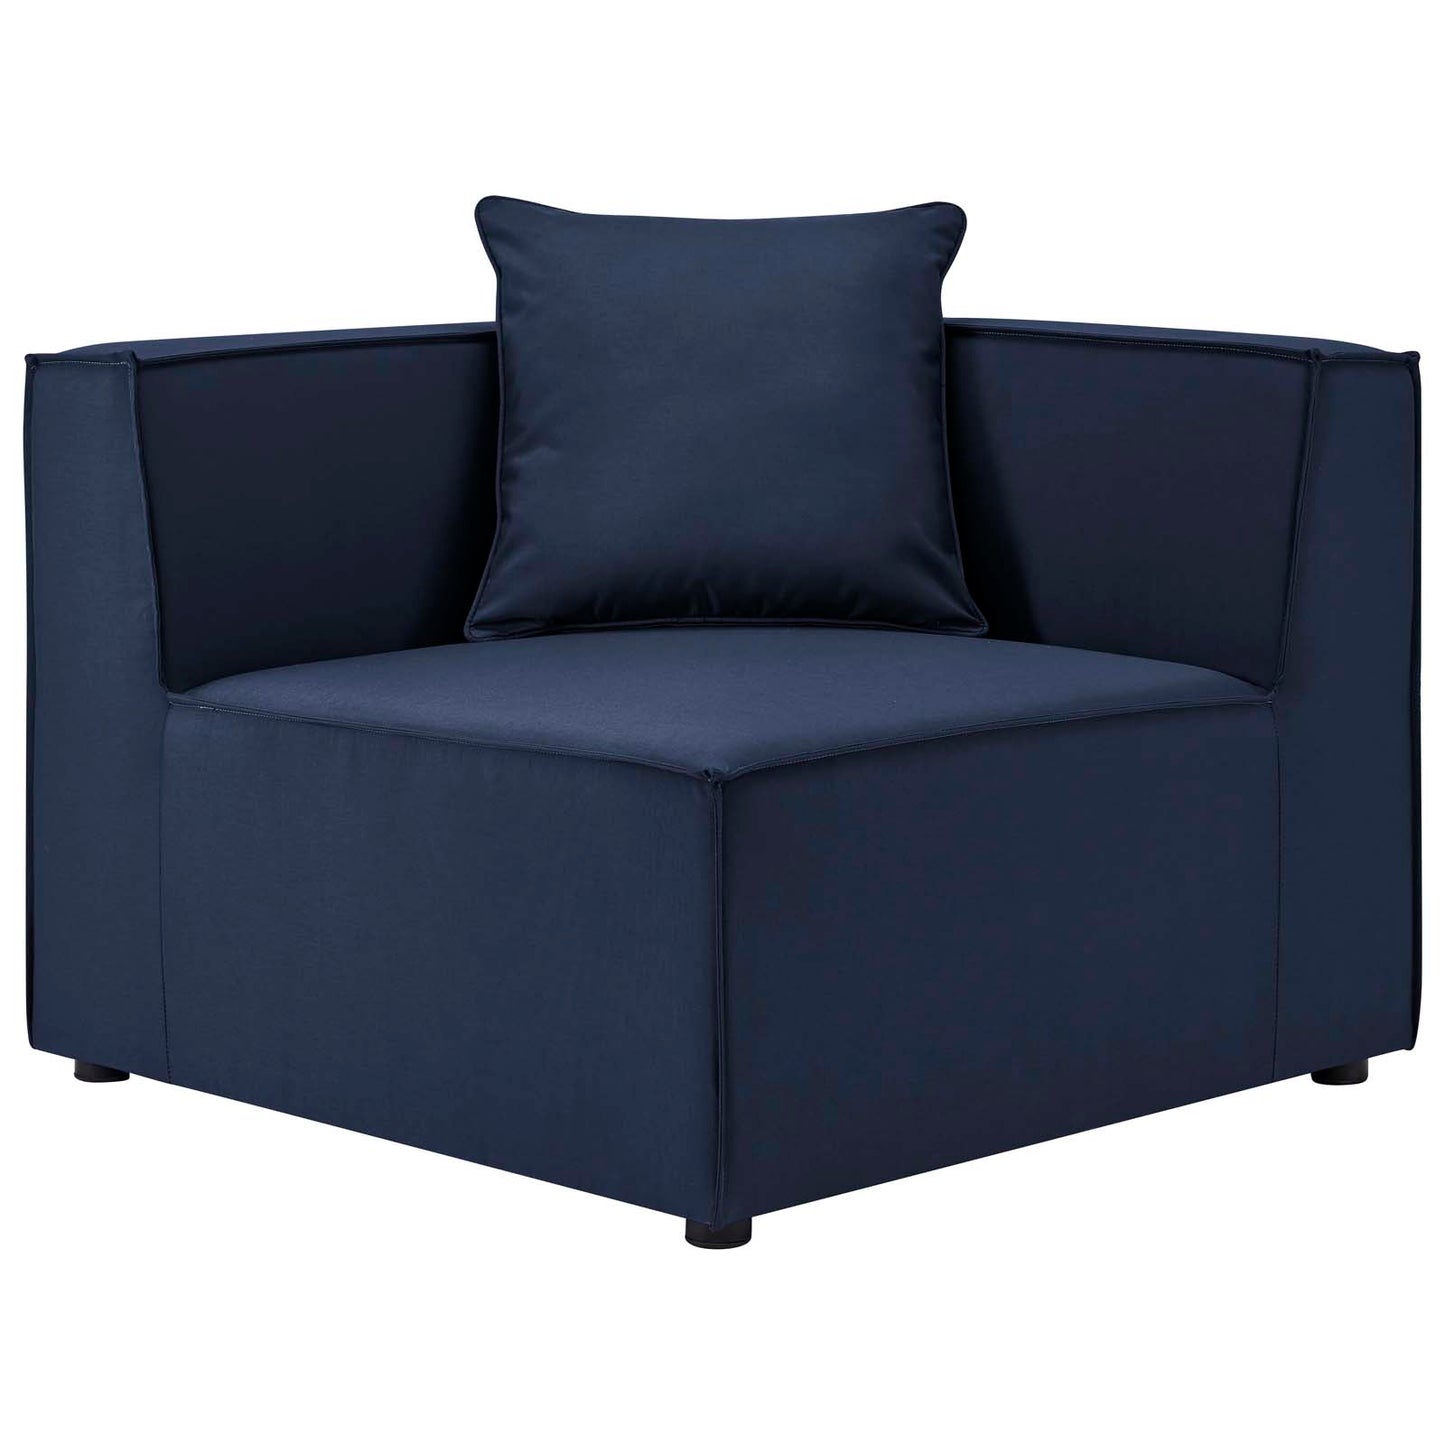 Saybrook Outdoor Patio Upholstered 5-Piece Sectional Sofa Navy EEI-4382-NAV